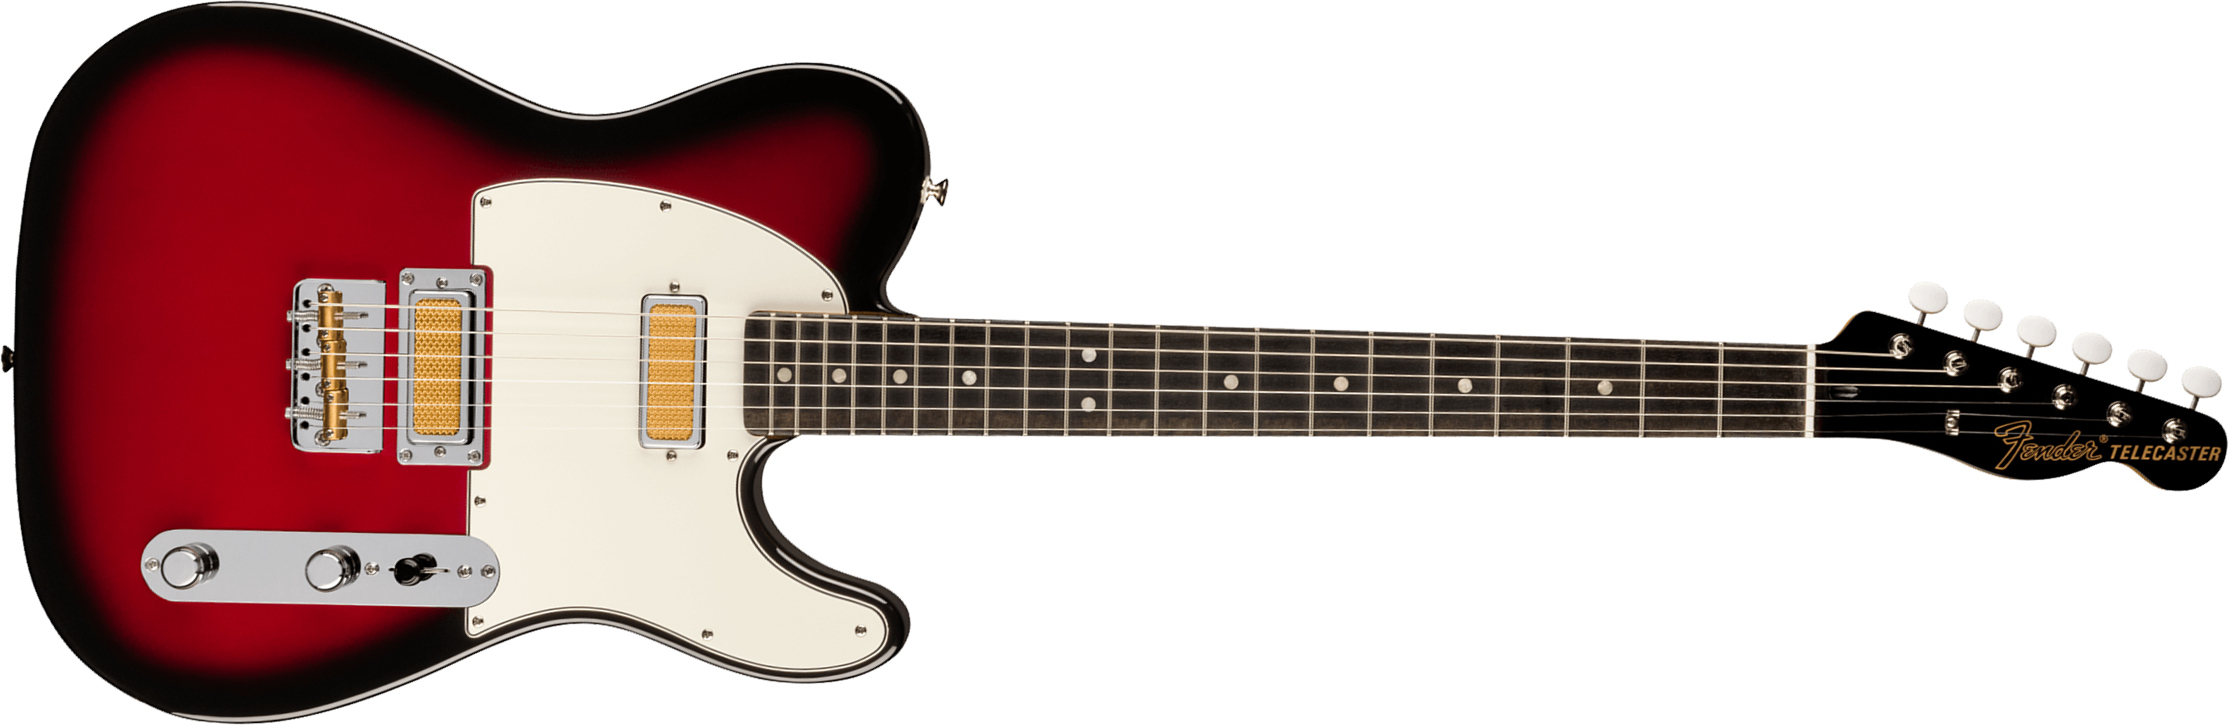 Fender Tele Gold Foil Ltd Mex 2mh Ht Eb - Candy Apple Burst - Televorm elektrische gitaar - Main picture